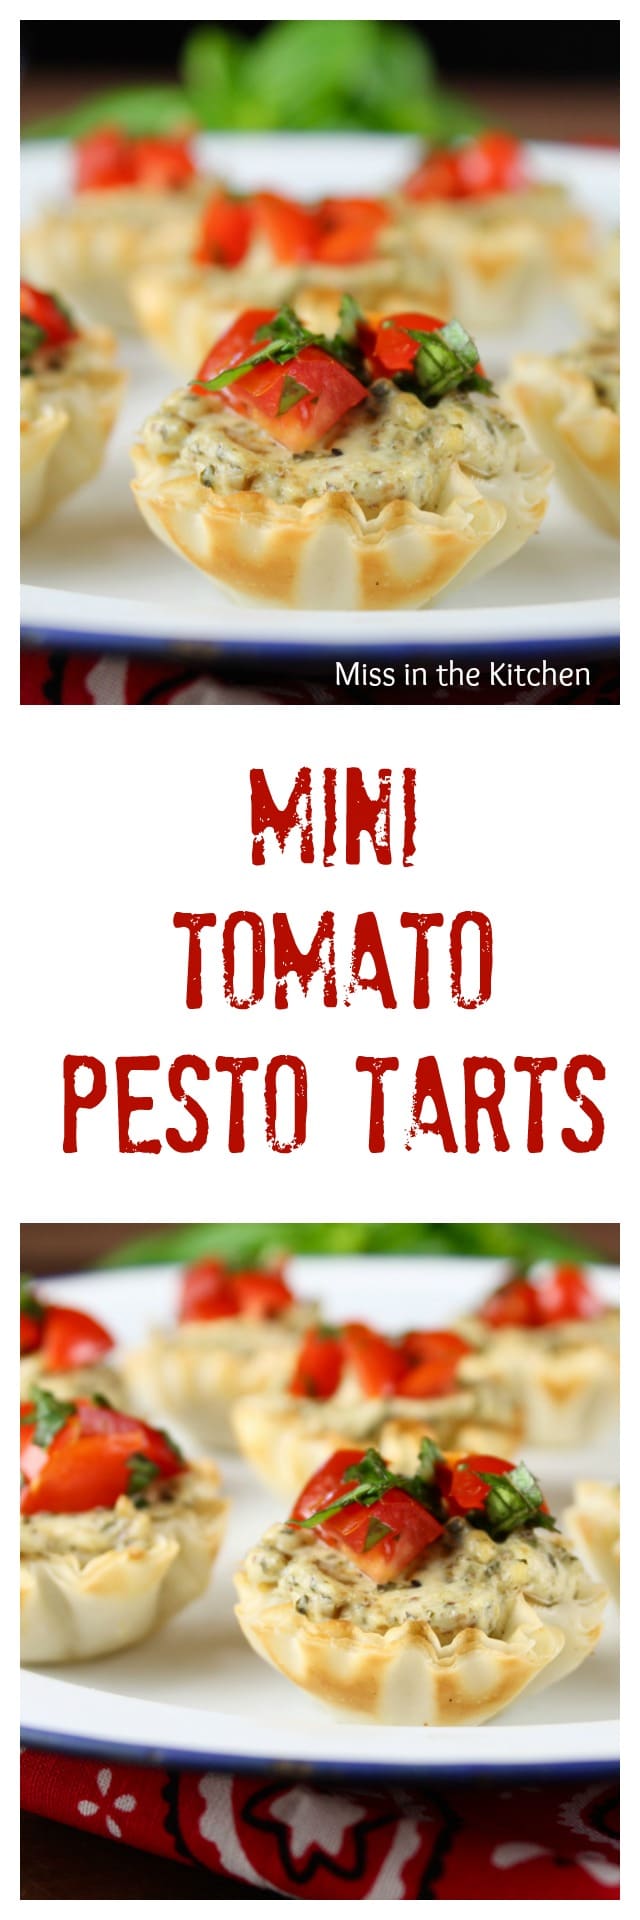 Mini Tomato Pesto Tarts - Miss in the Kitchen